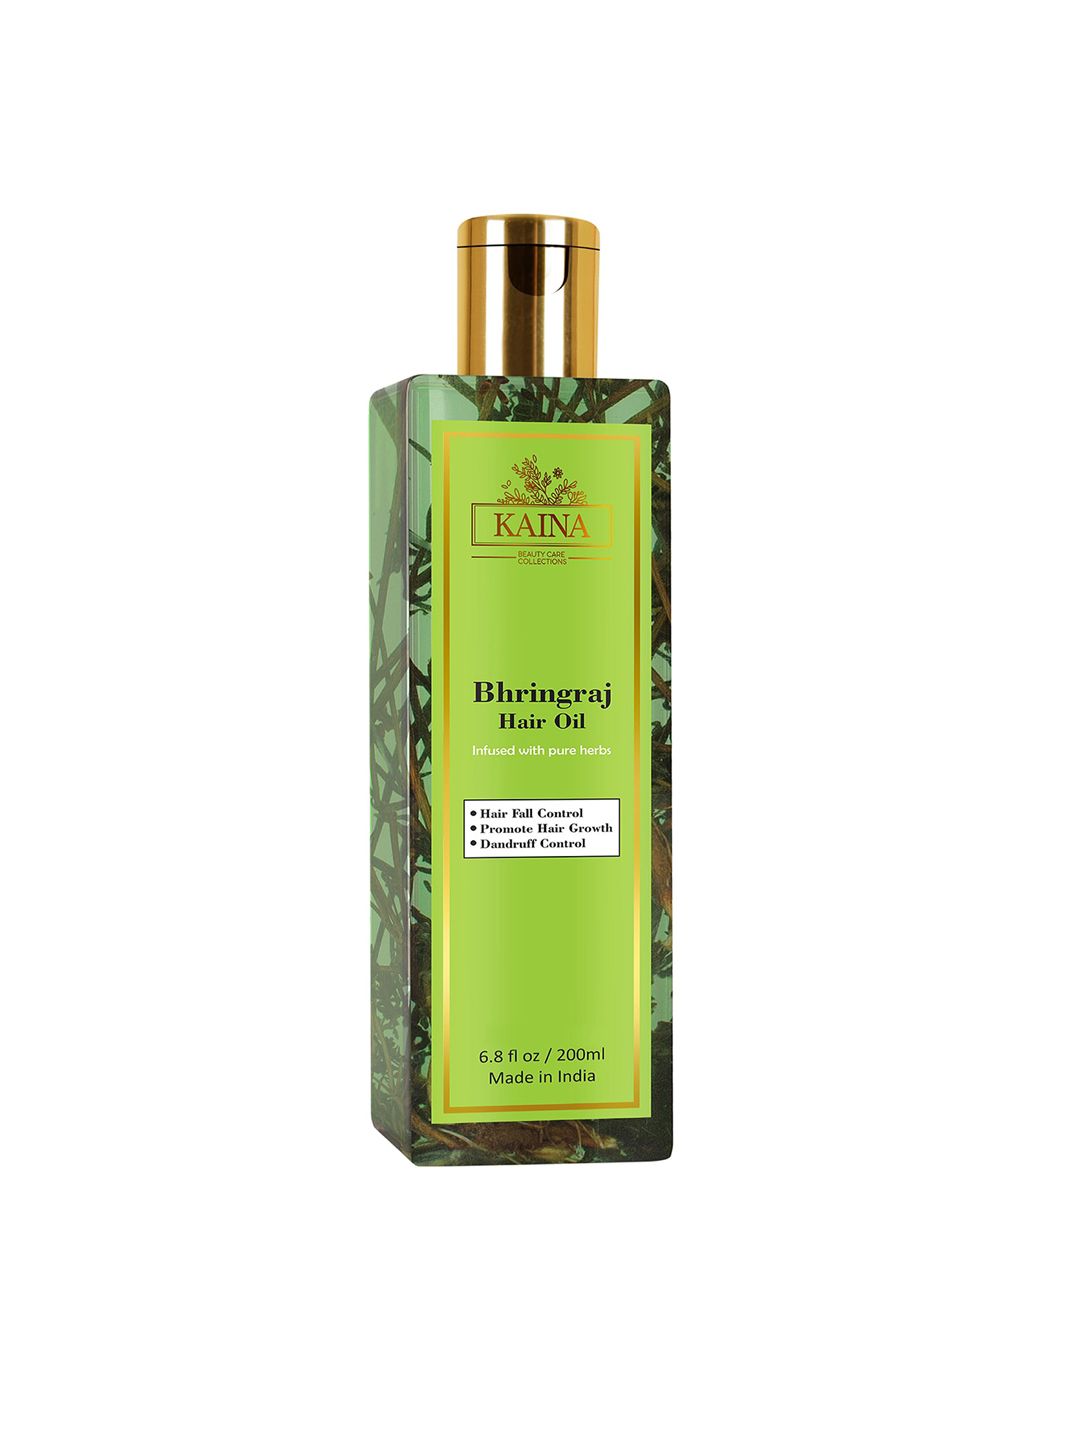 Kaina skincare Bhringraj Hair Oil with Pure Herbs - 200 ml Price in India